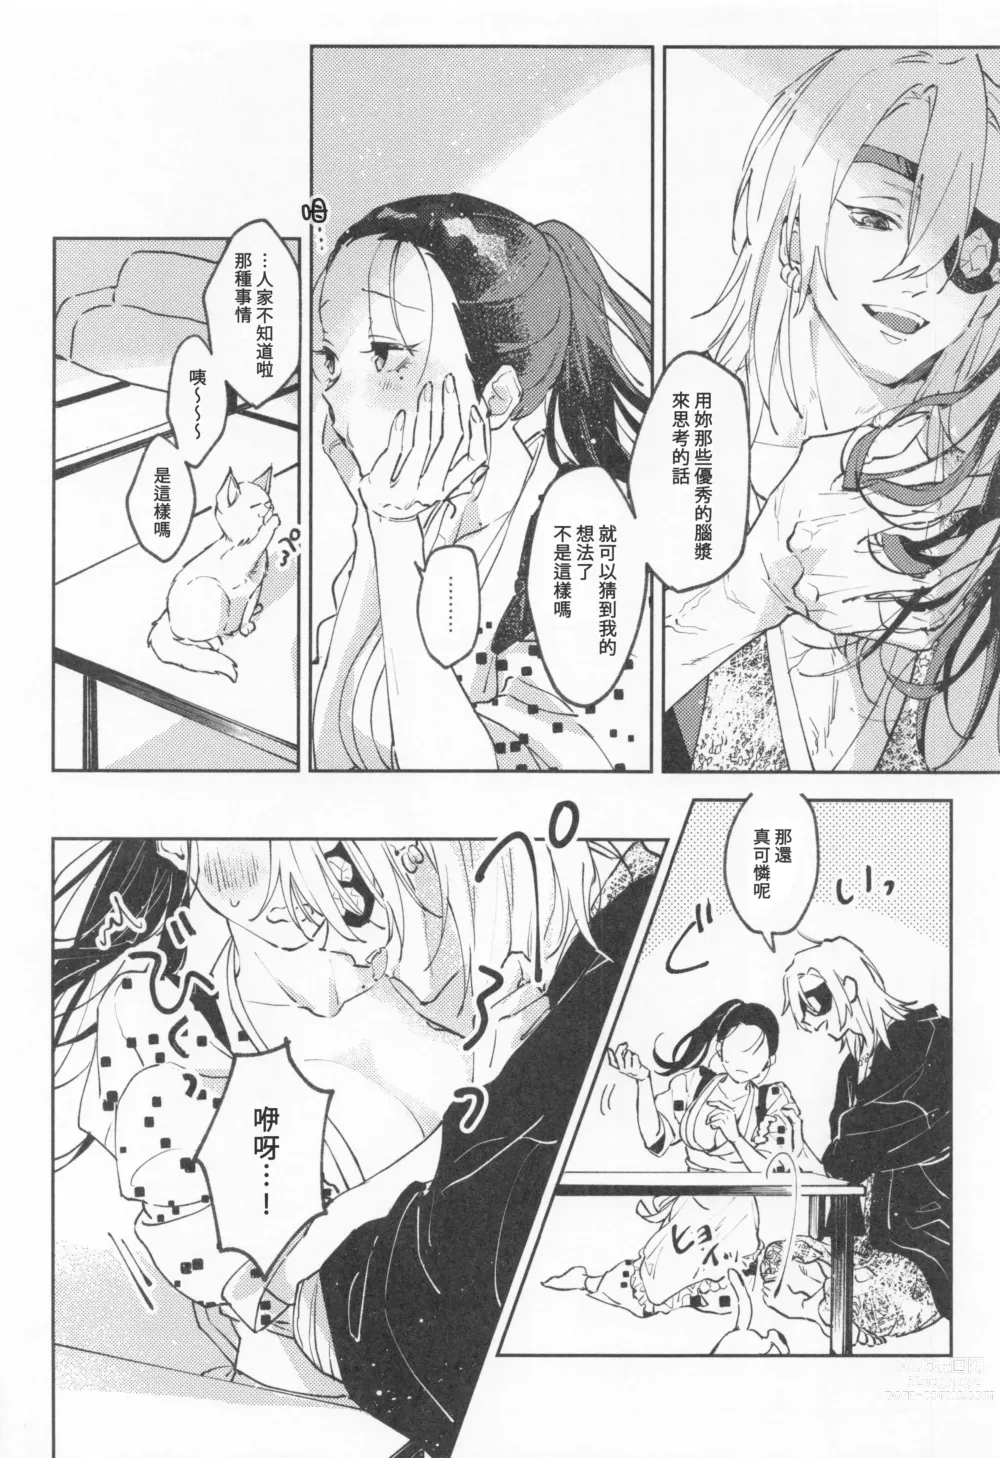 Page 9 of doujinshi H. - Cichidotto.